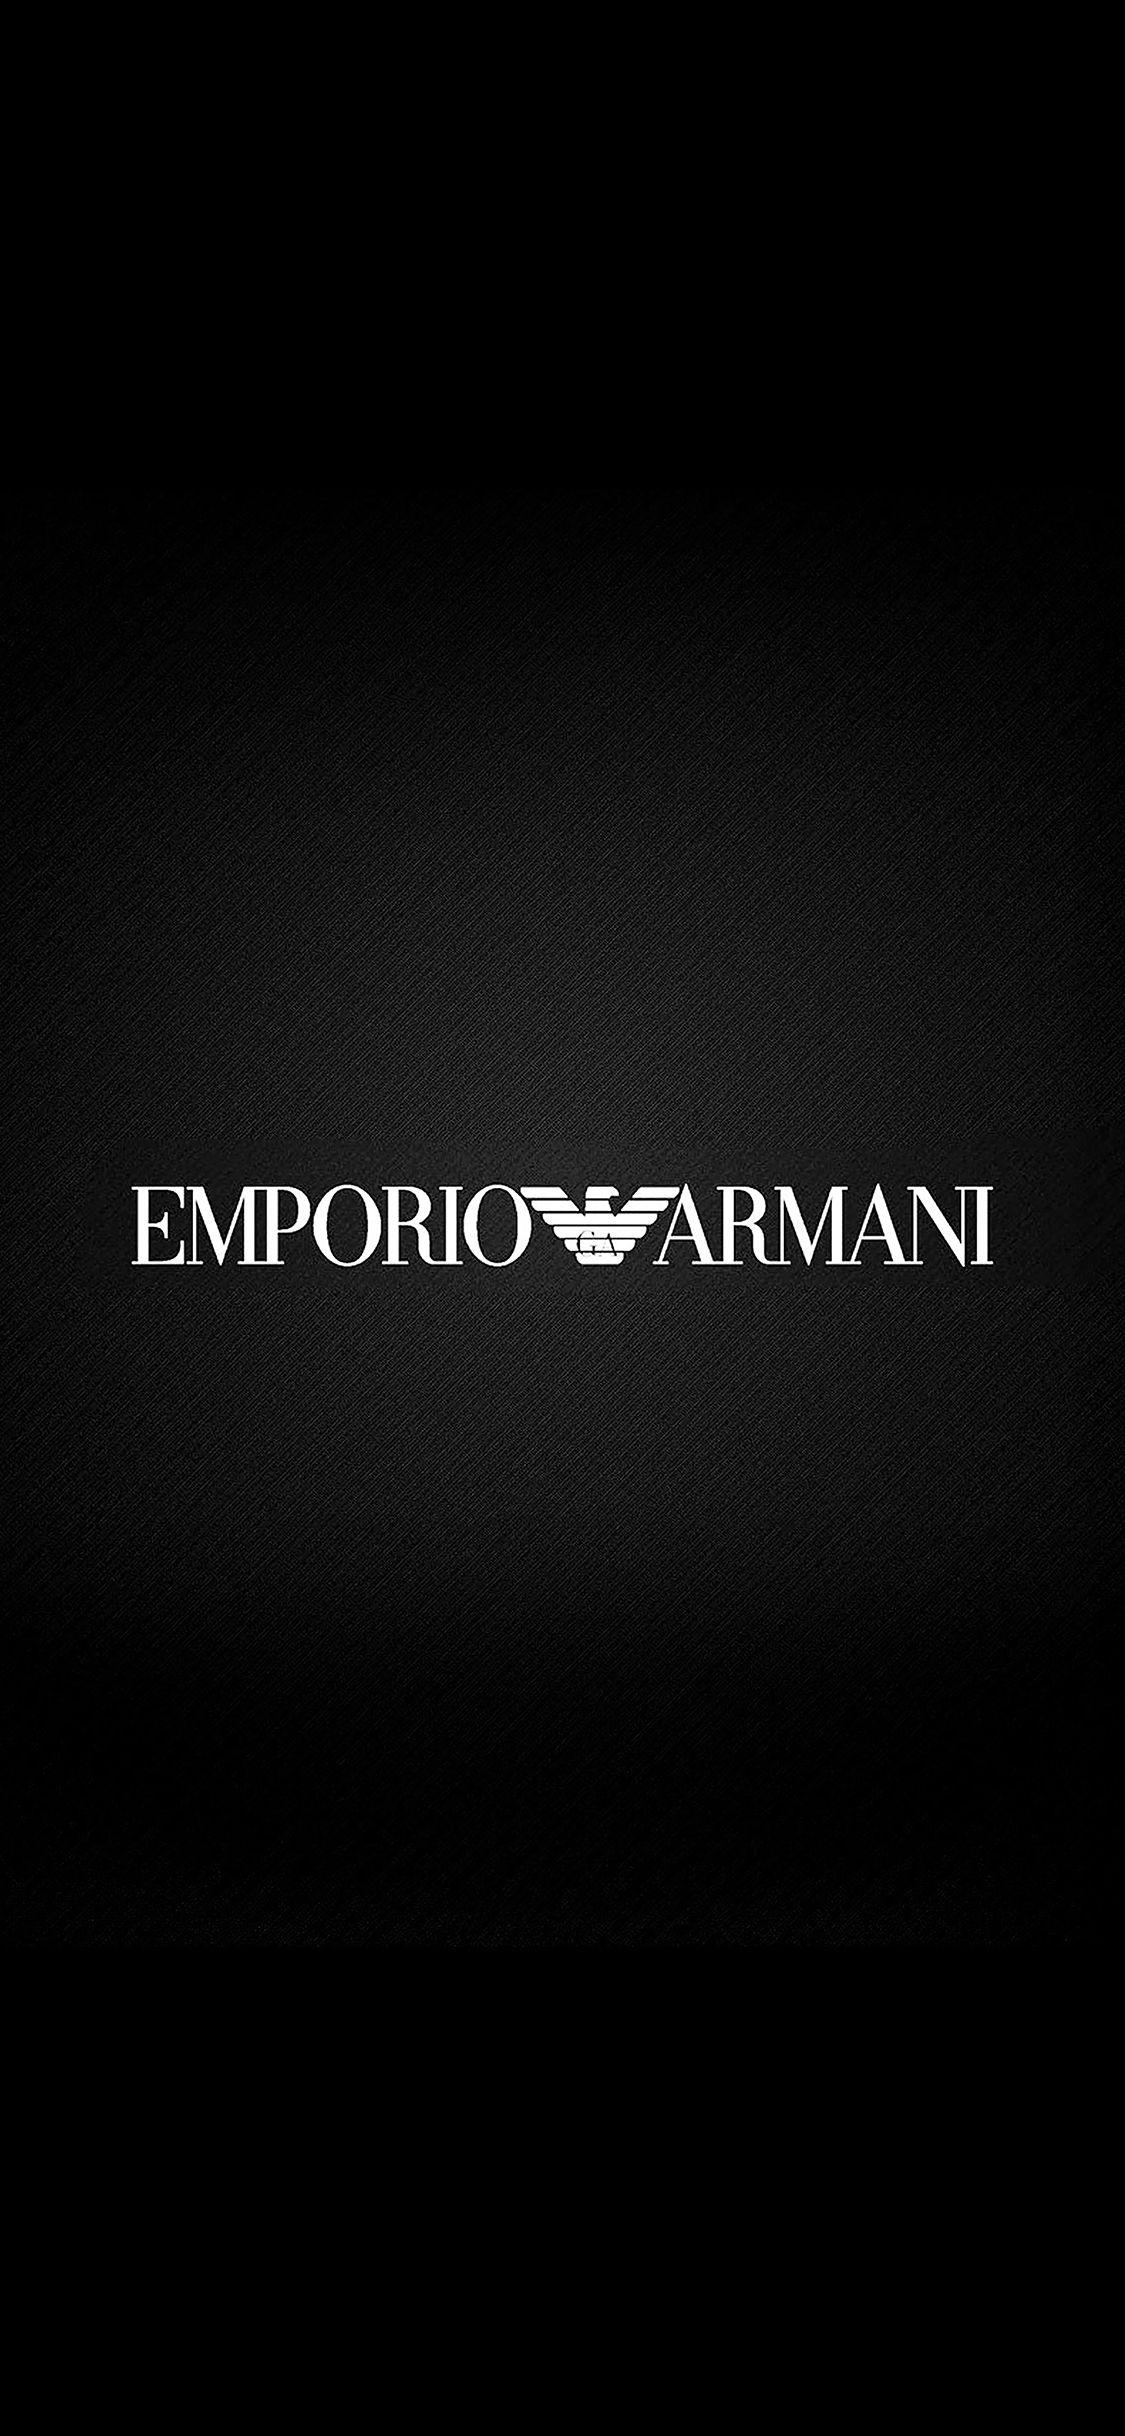 Emporio Armani Logo Wallpapers - Wallpaper Cave